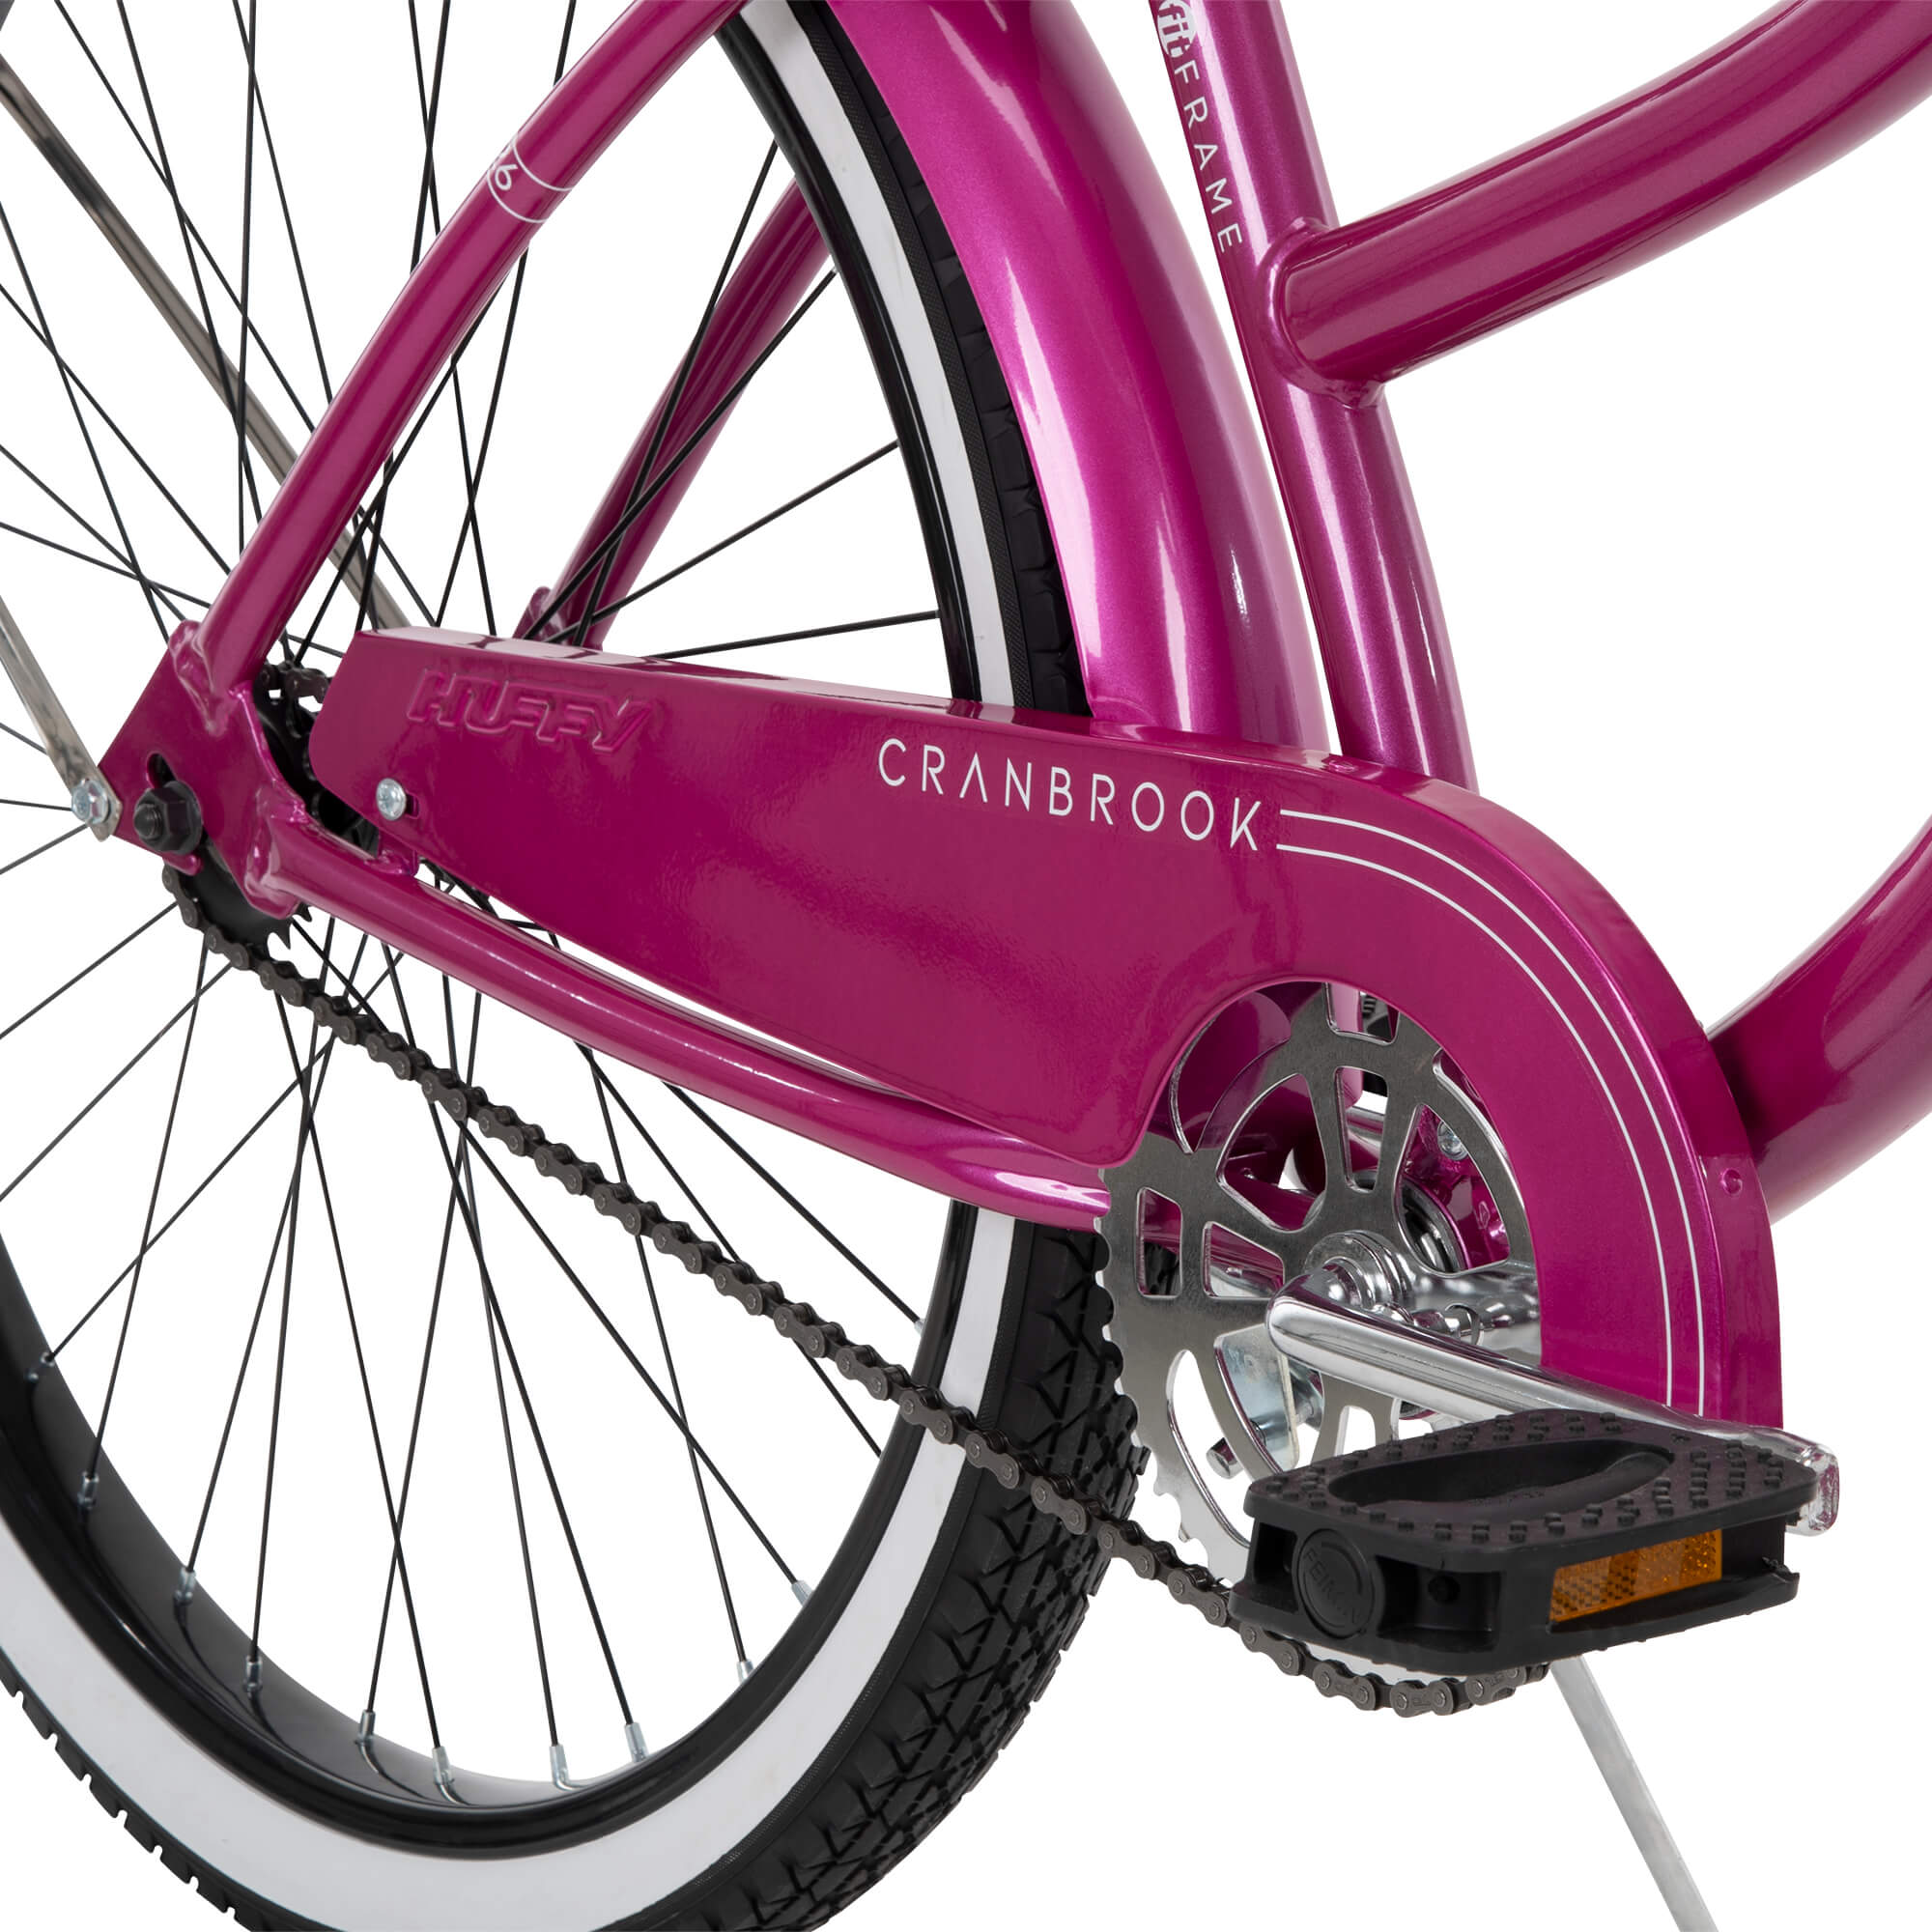 Huffy 26" Cranbrook Women's Beach Cruiser Bike, Pink - image 4 of 9